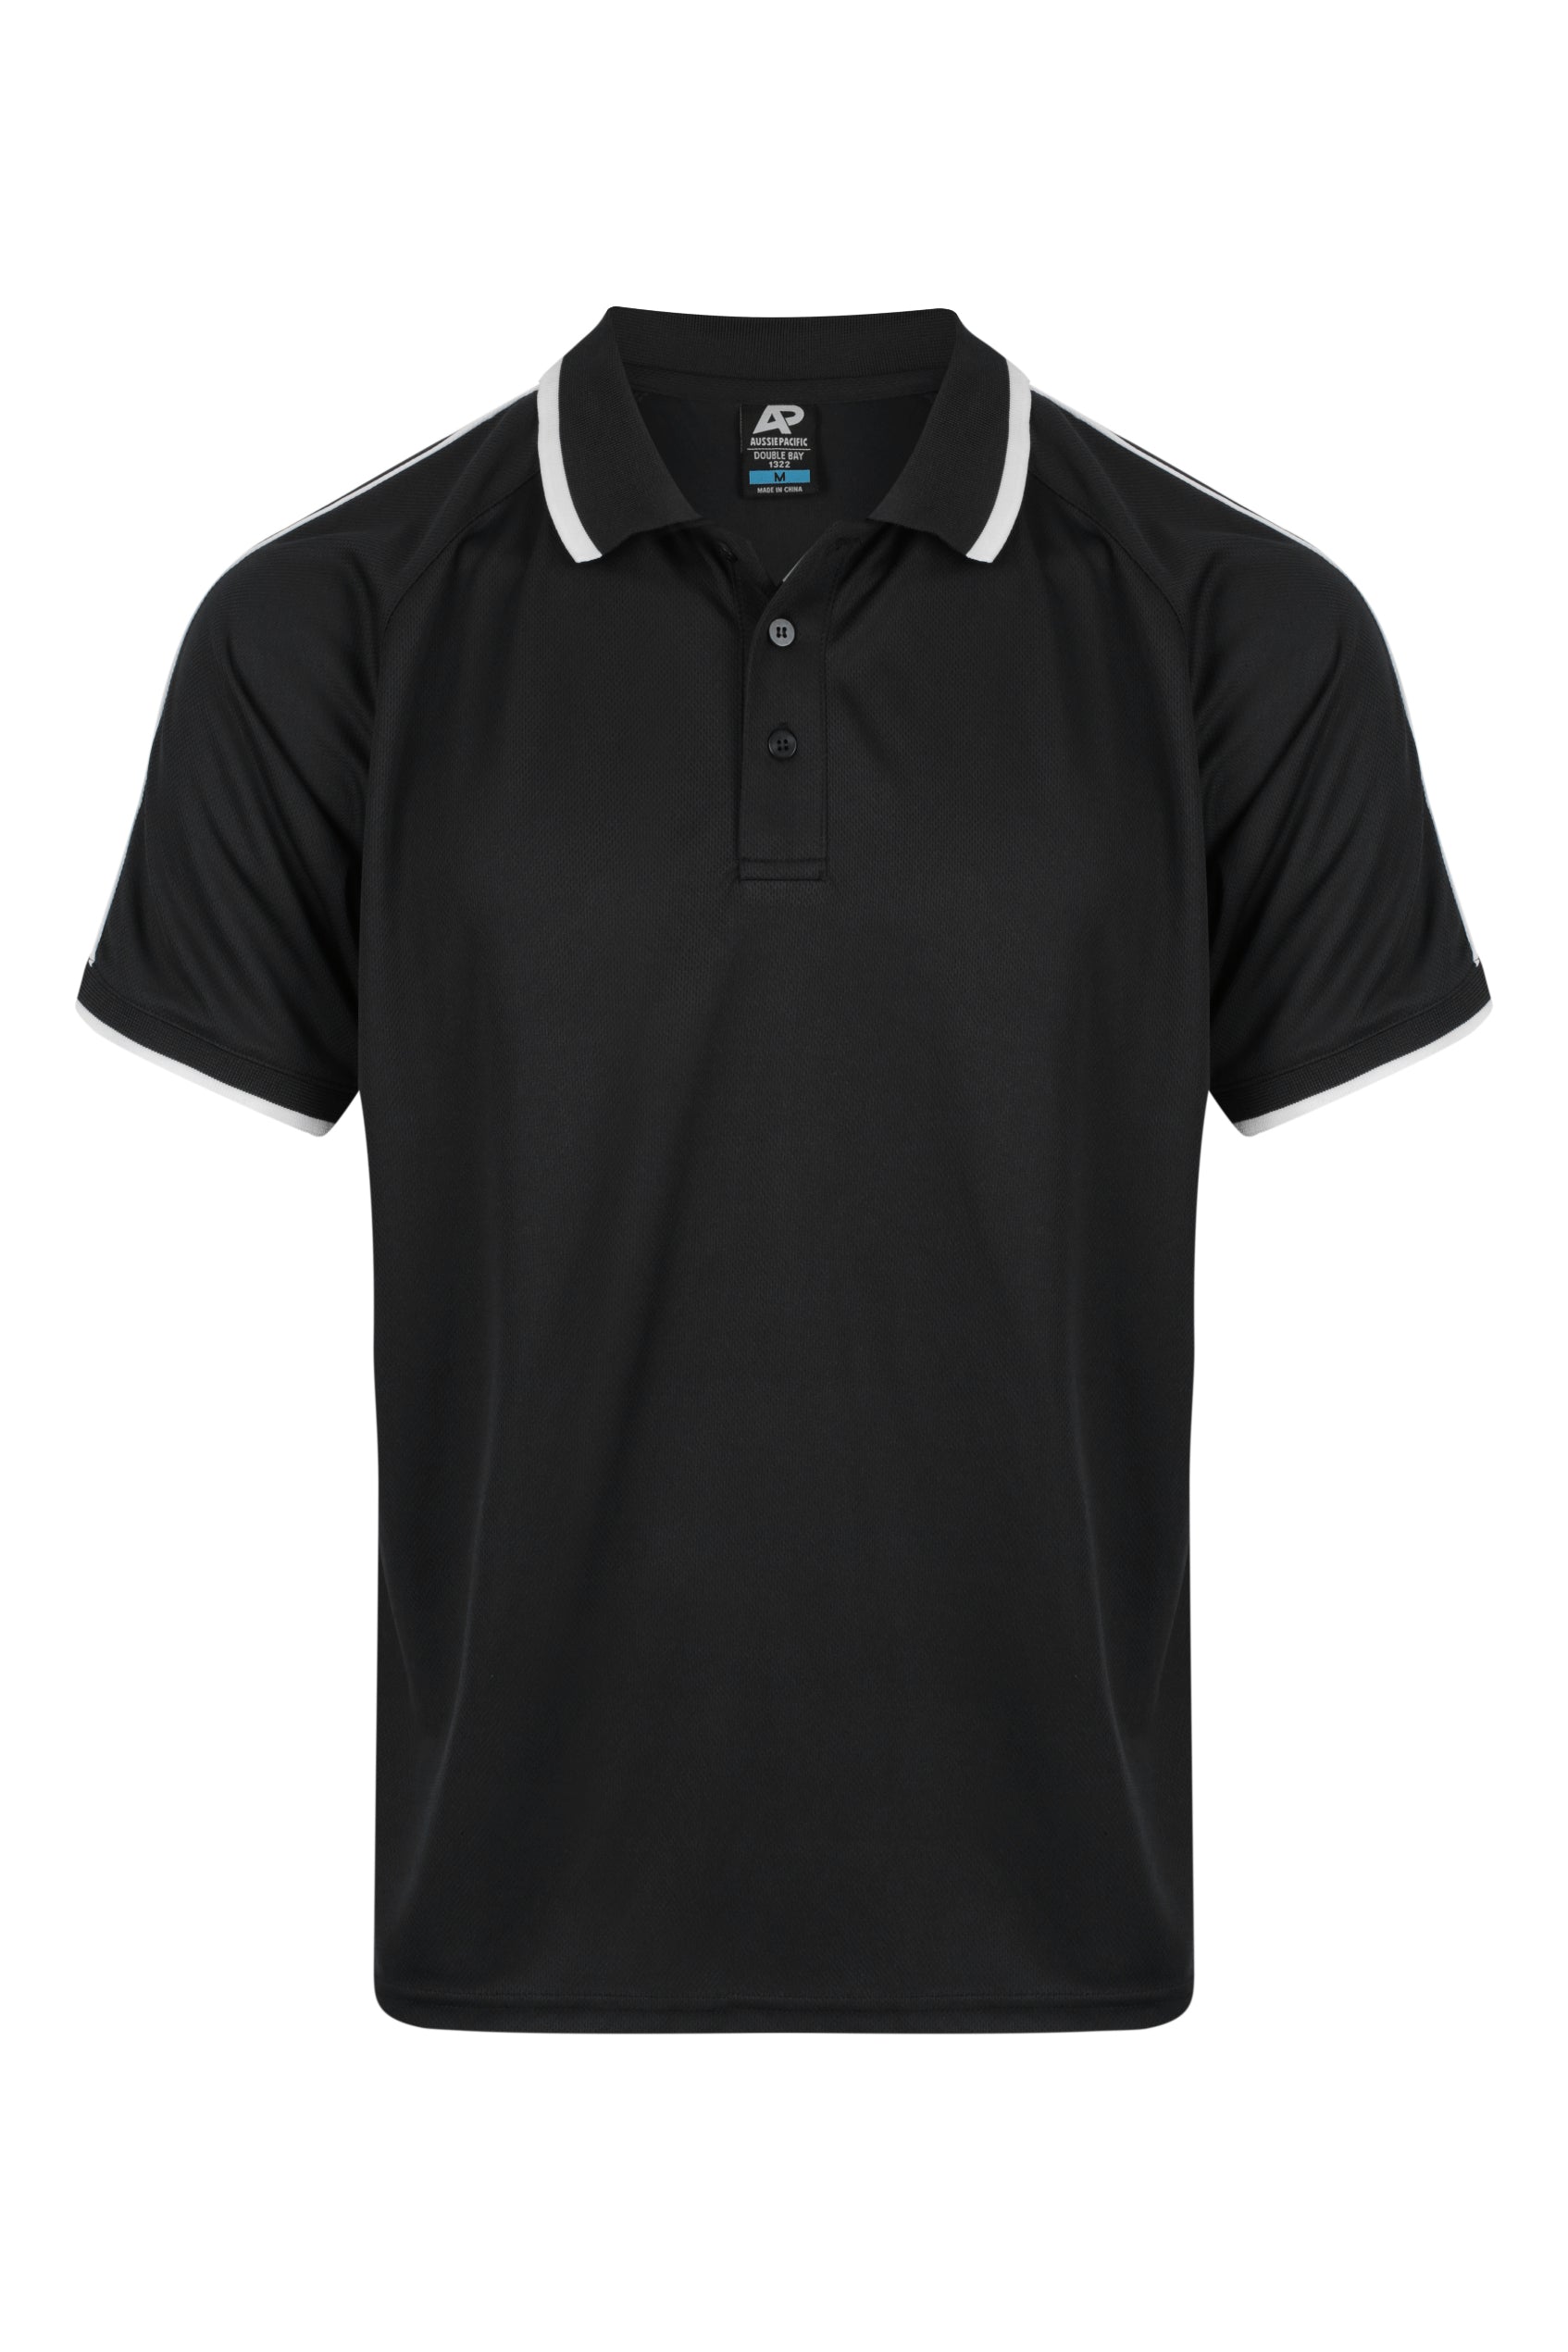 Custom Double Bay Uniform Polo Shirts - Black/White